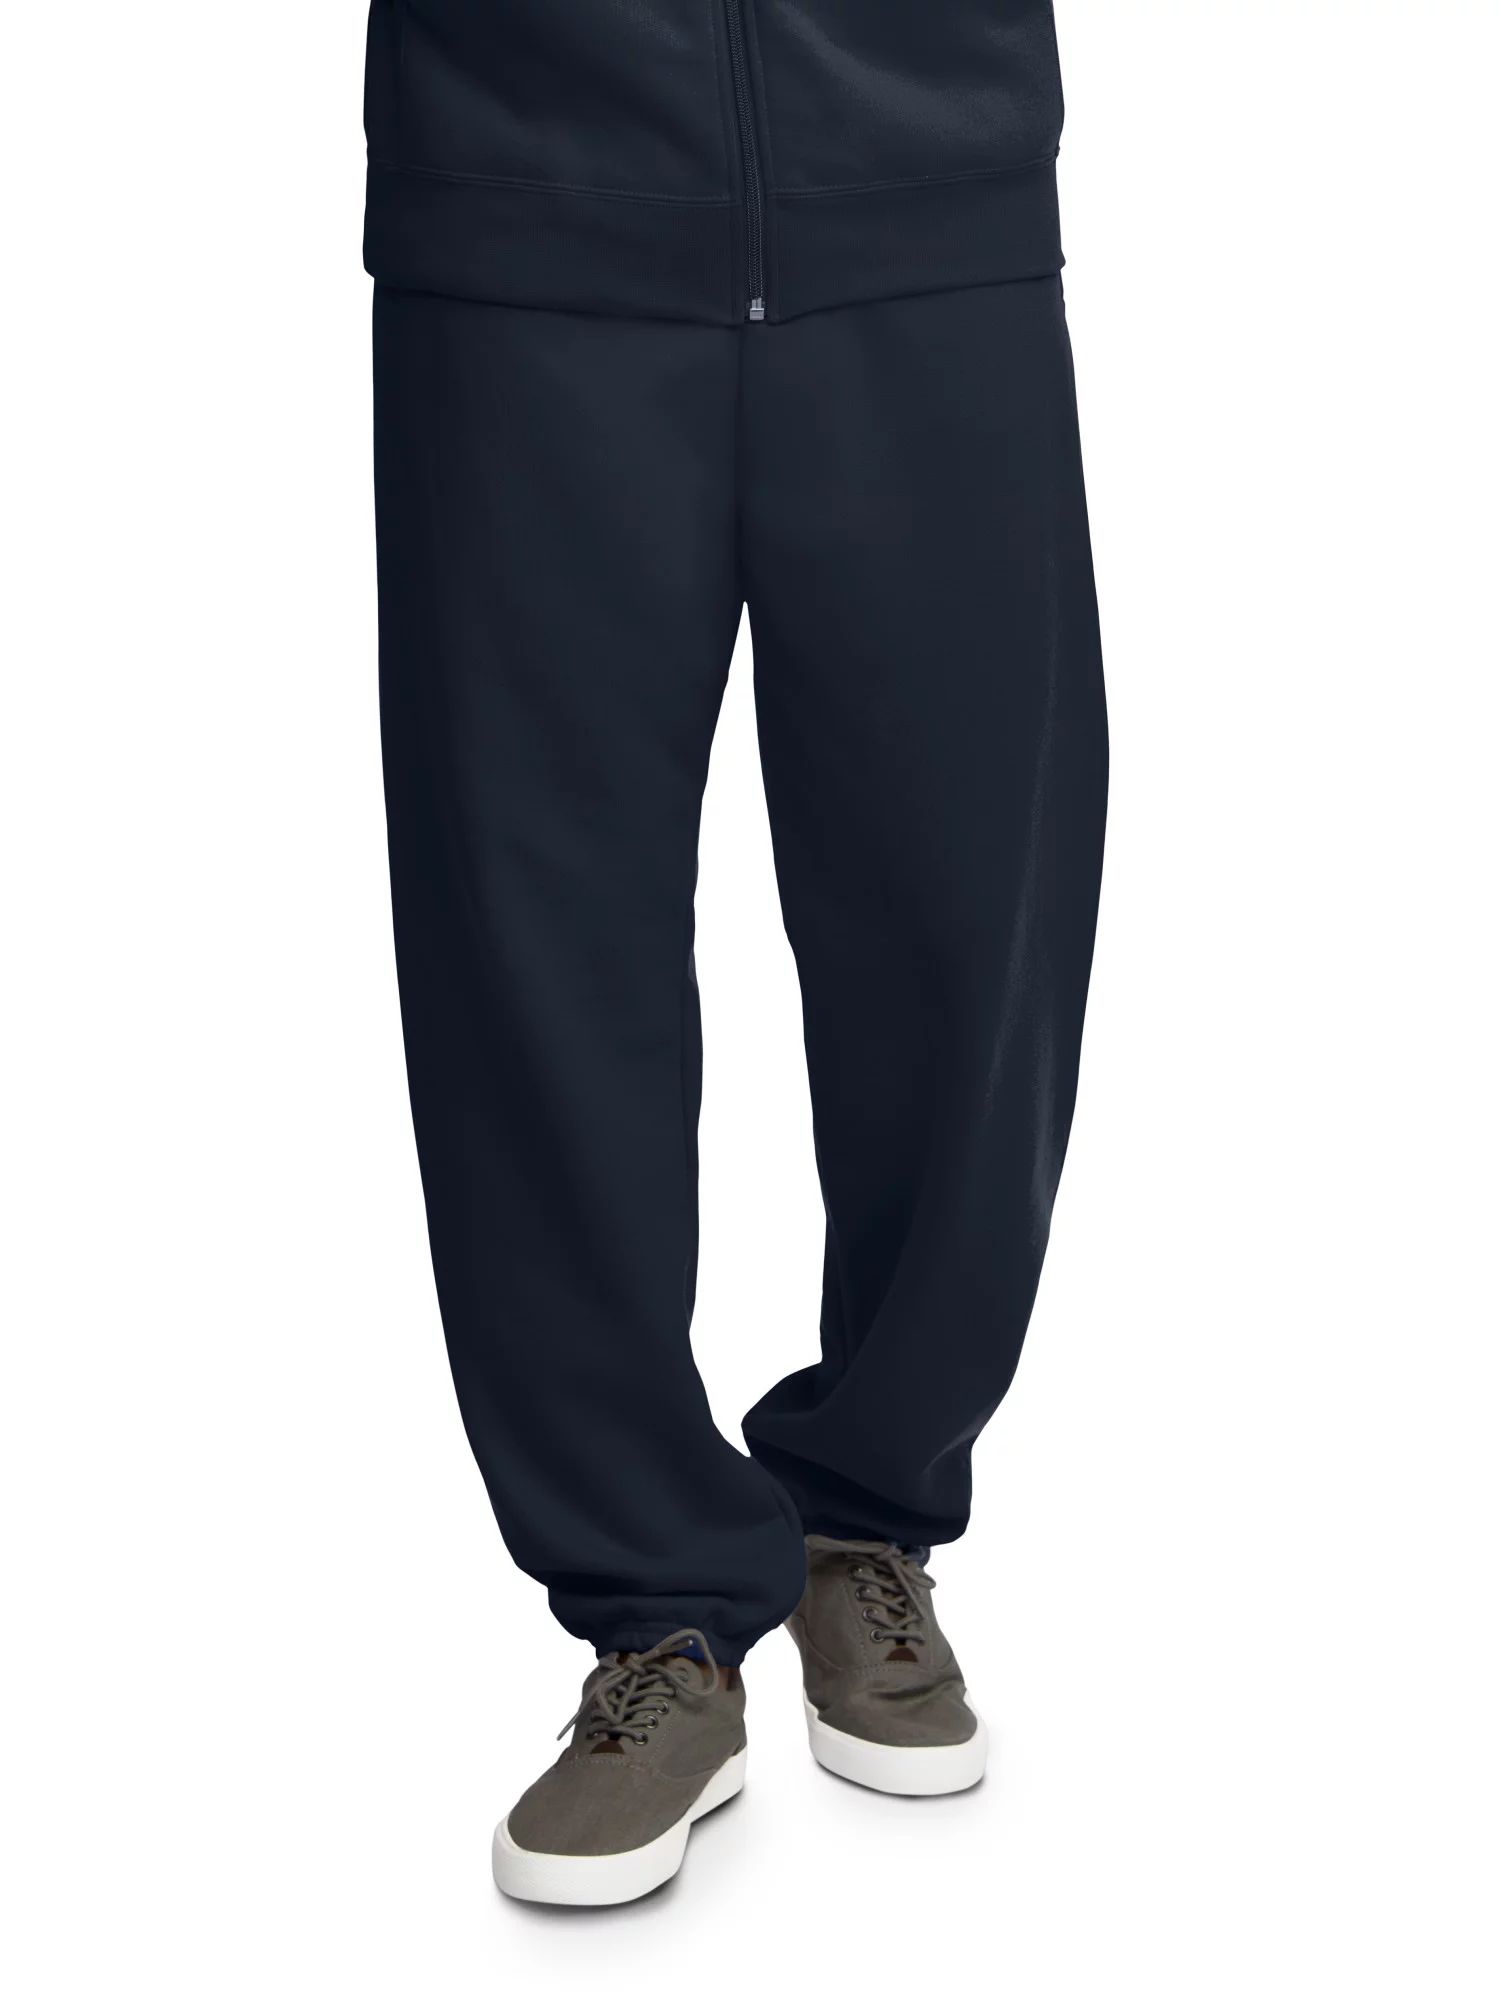 Fruit of the Loom Men's EverSoft Fleece Elastic Bottom Sweatpants Sizes S-4XL | Walmart (US)